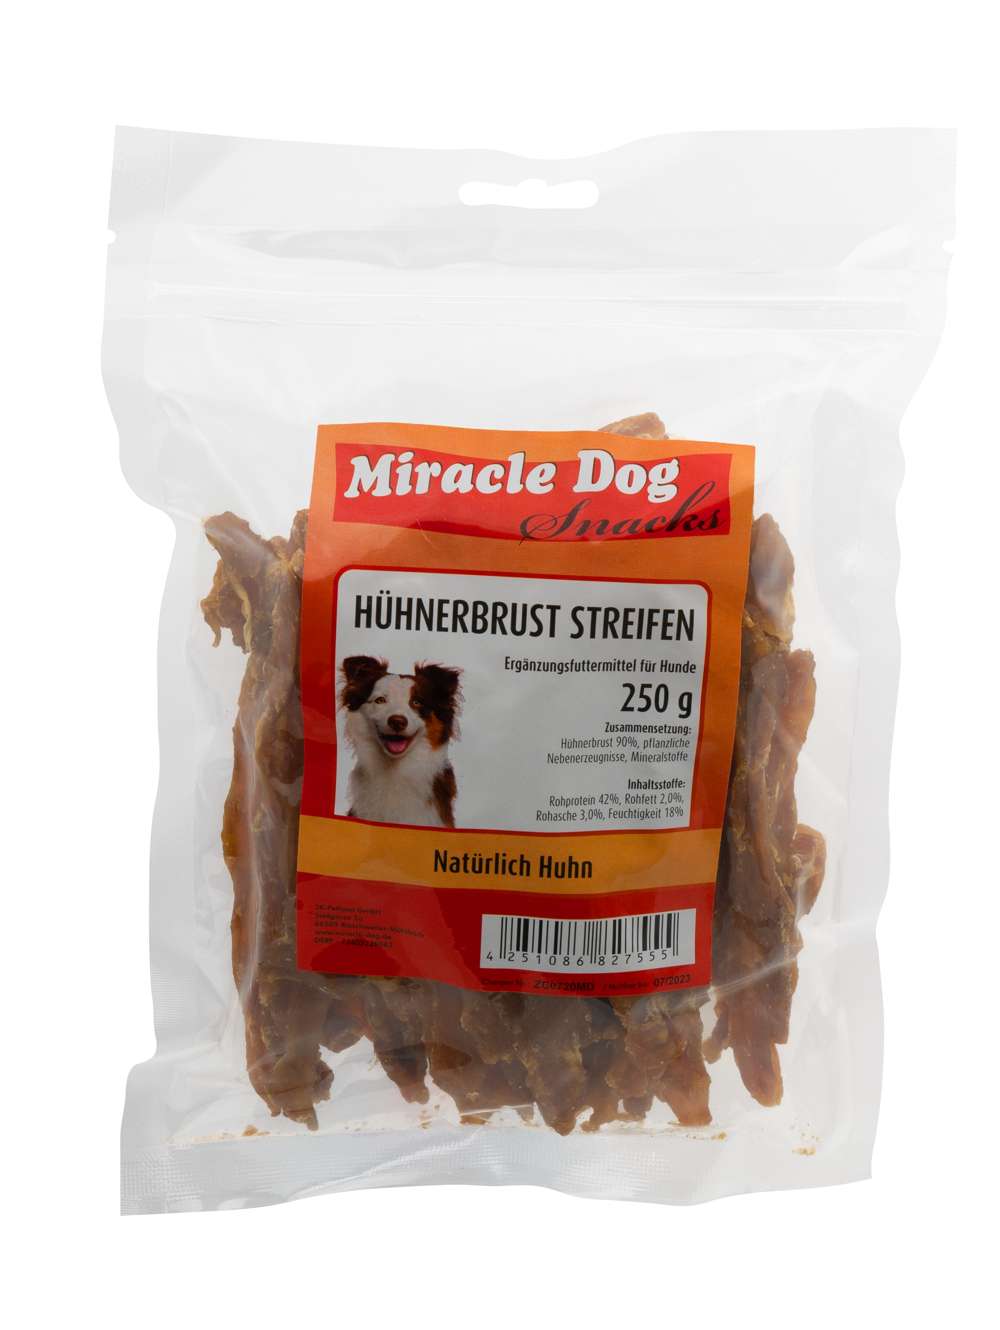 Miracle Dog Hühnerbrust & Streifen